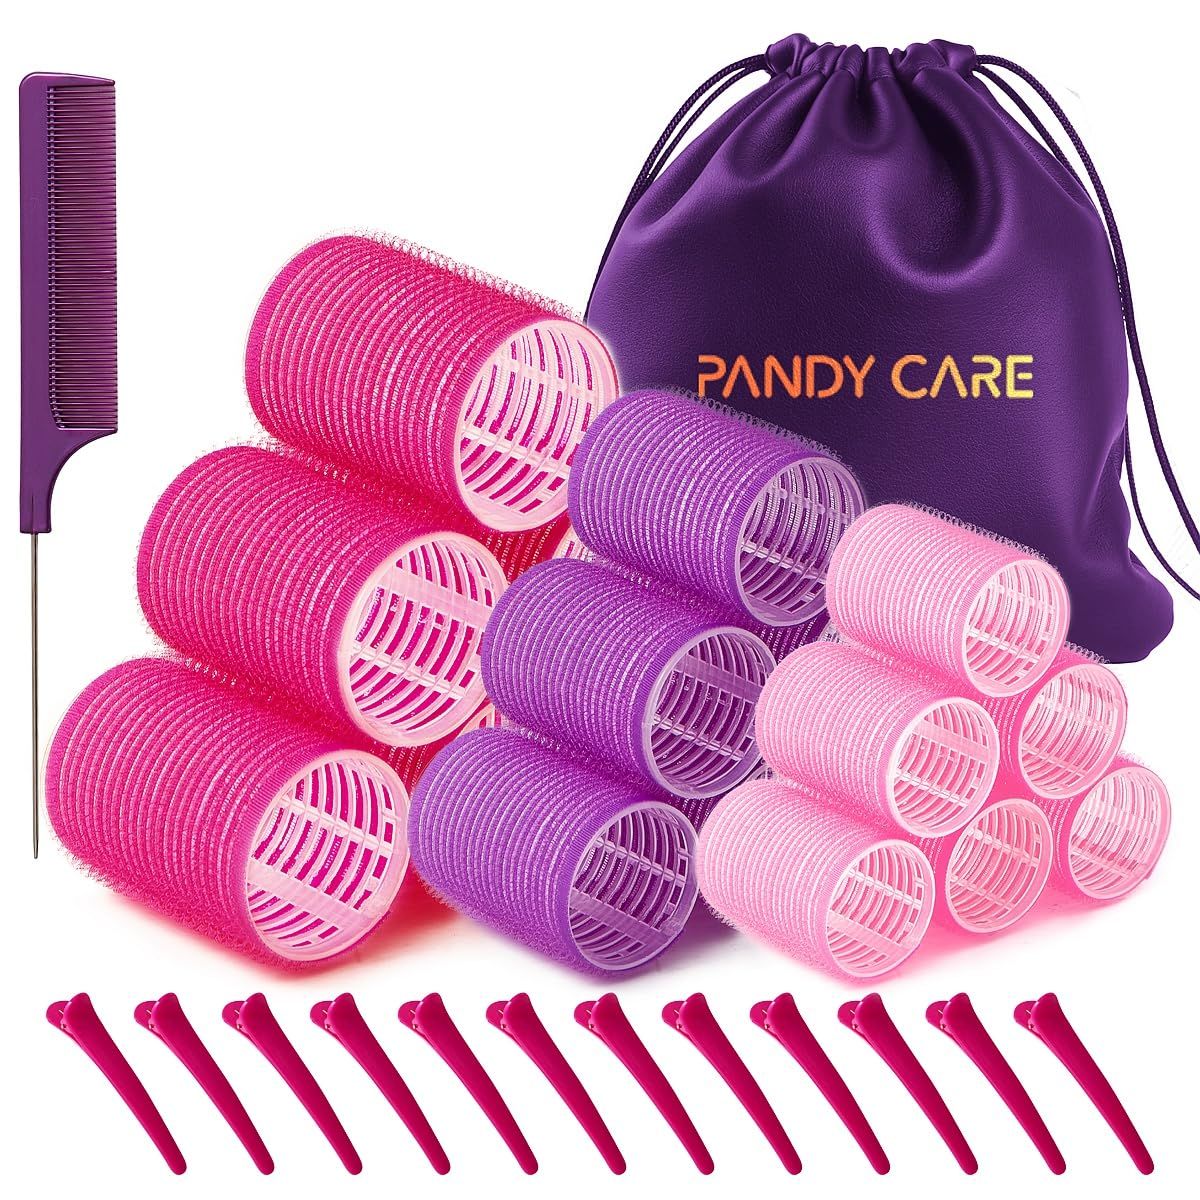 Hair Rollers Set 32 PCS, PandyCare For Long & Short - No Heat, Hair-friendly, Natural Effect, Inc... | Amazon (UK)